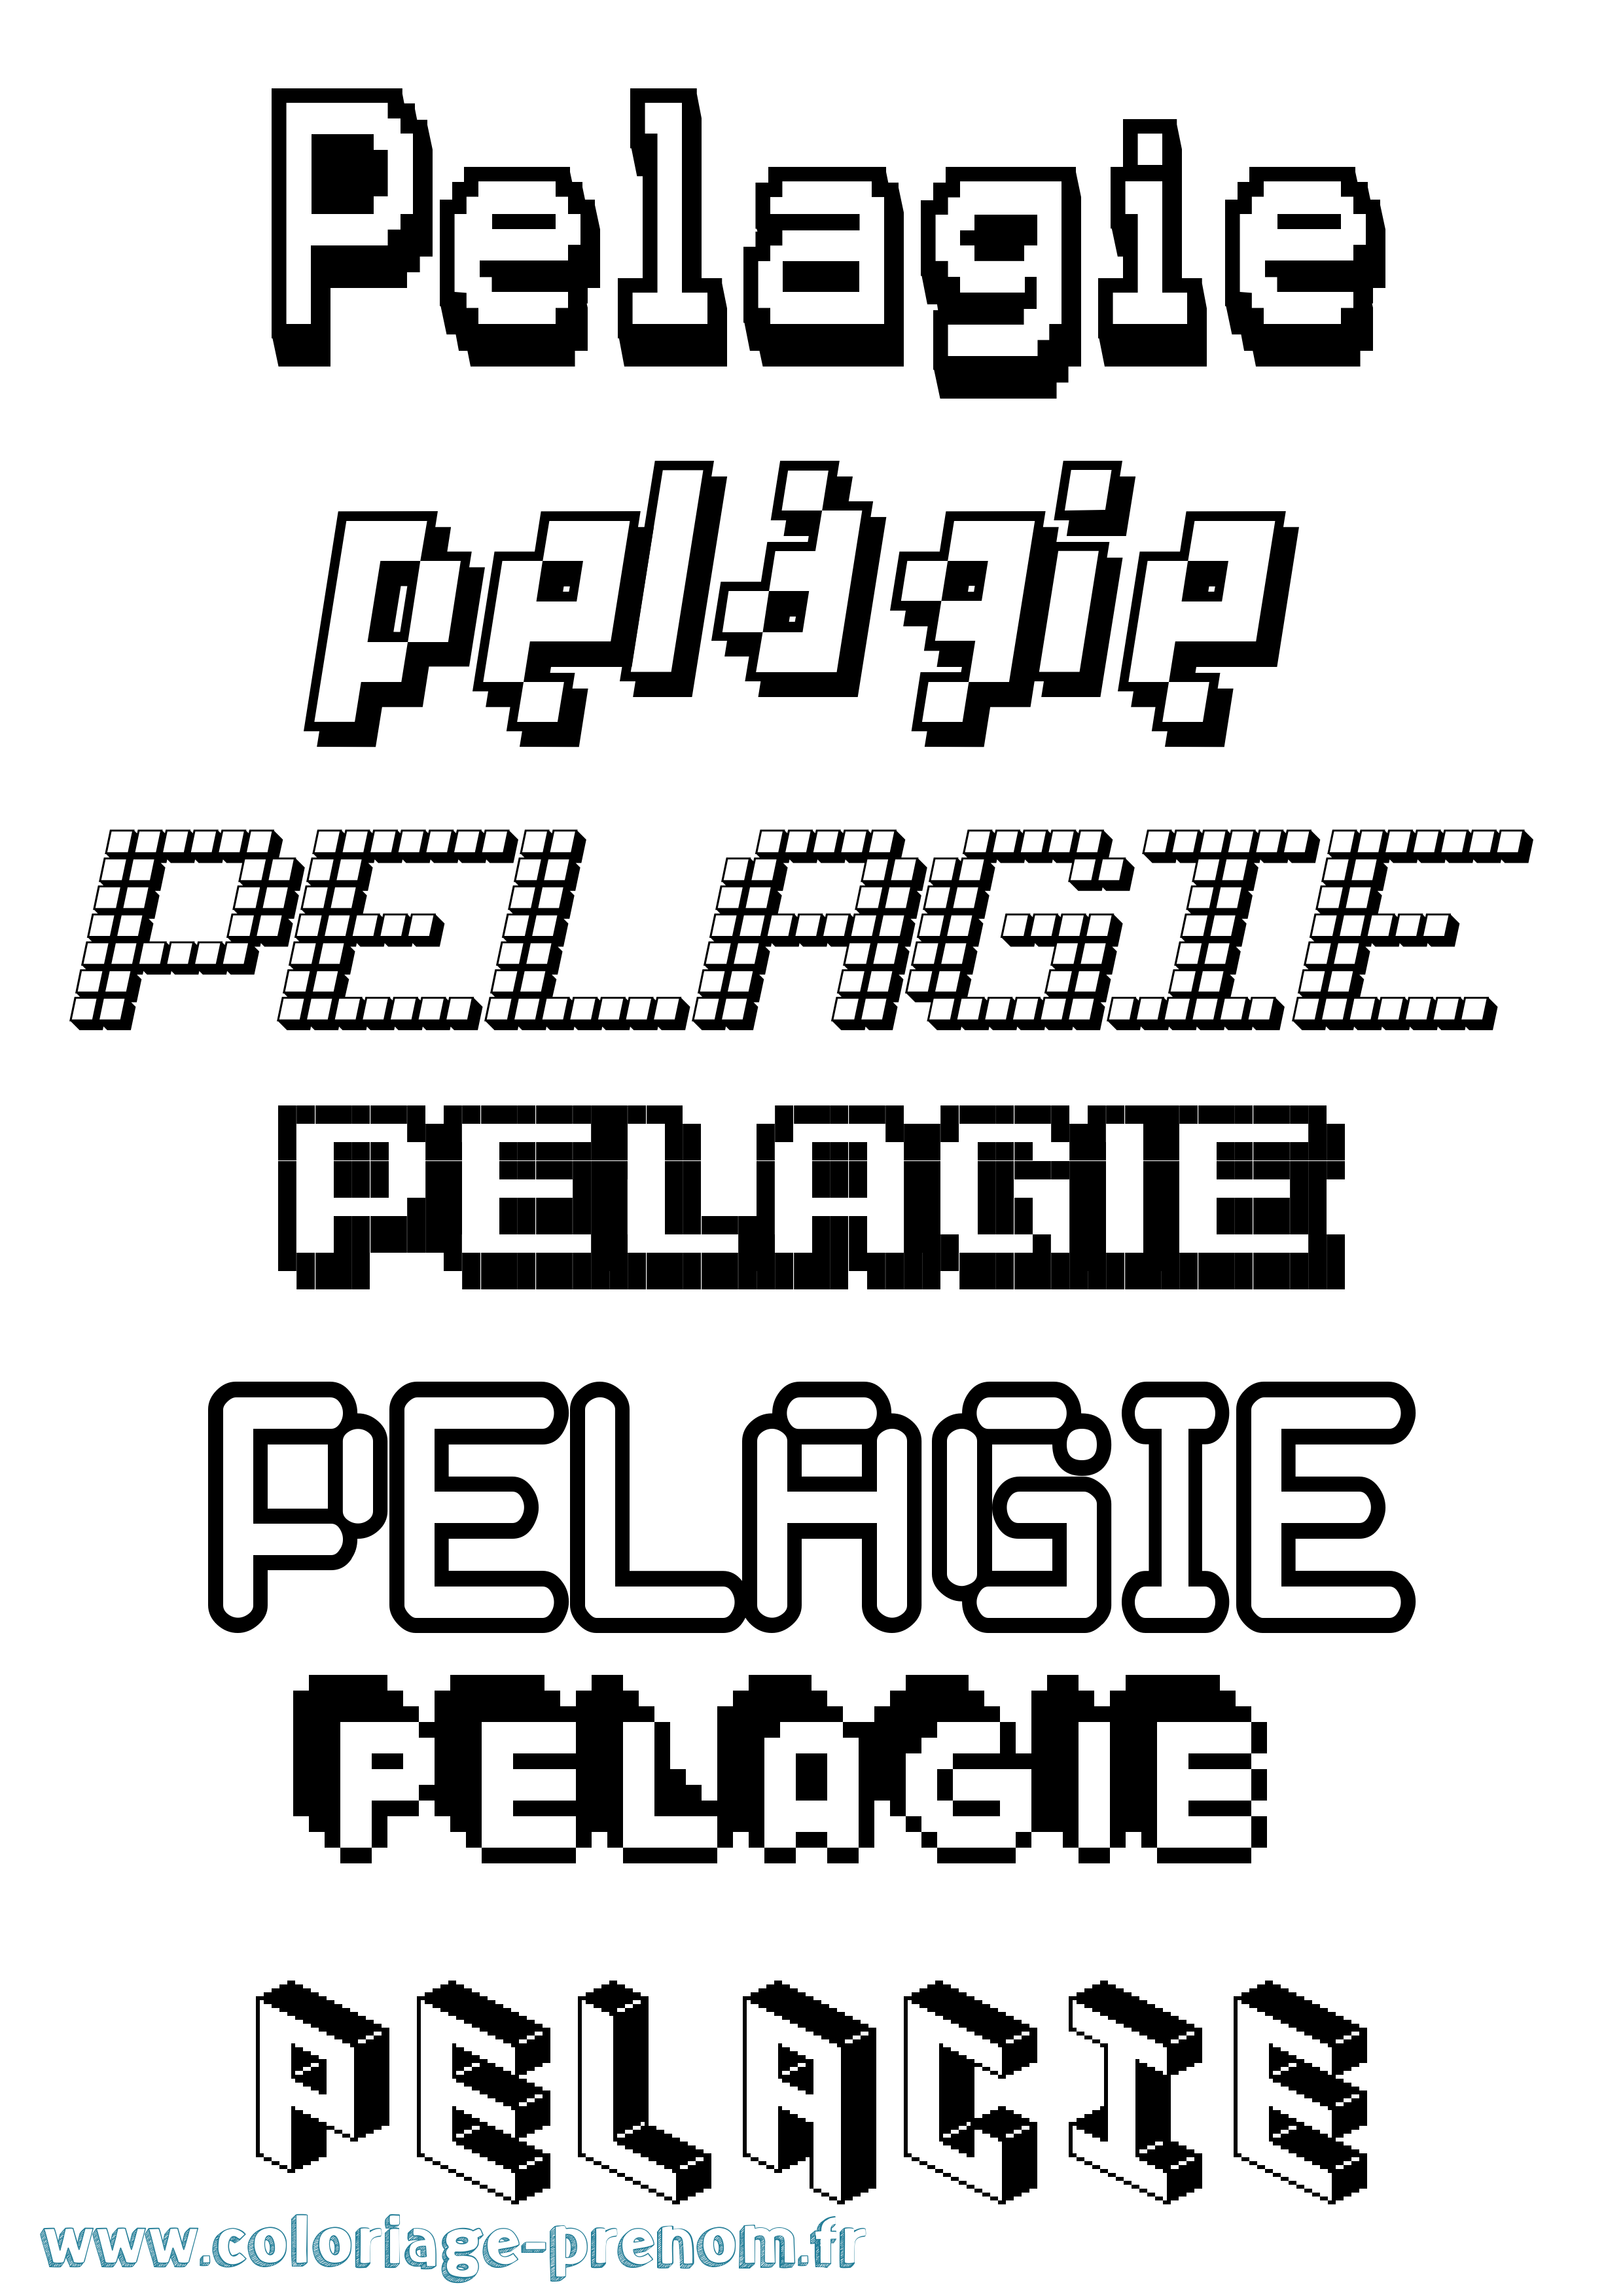 Coloriage prénom Pelagie Pixel